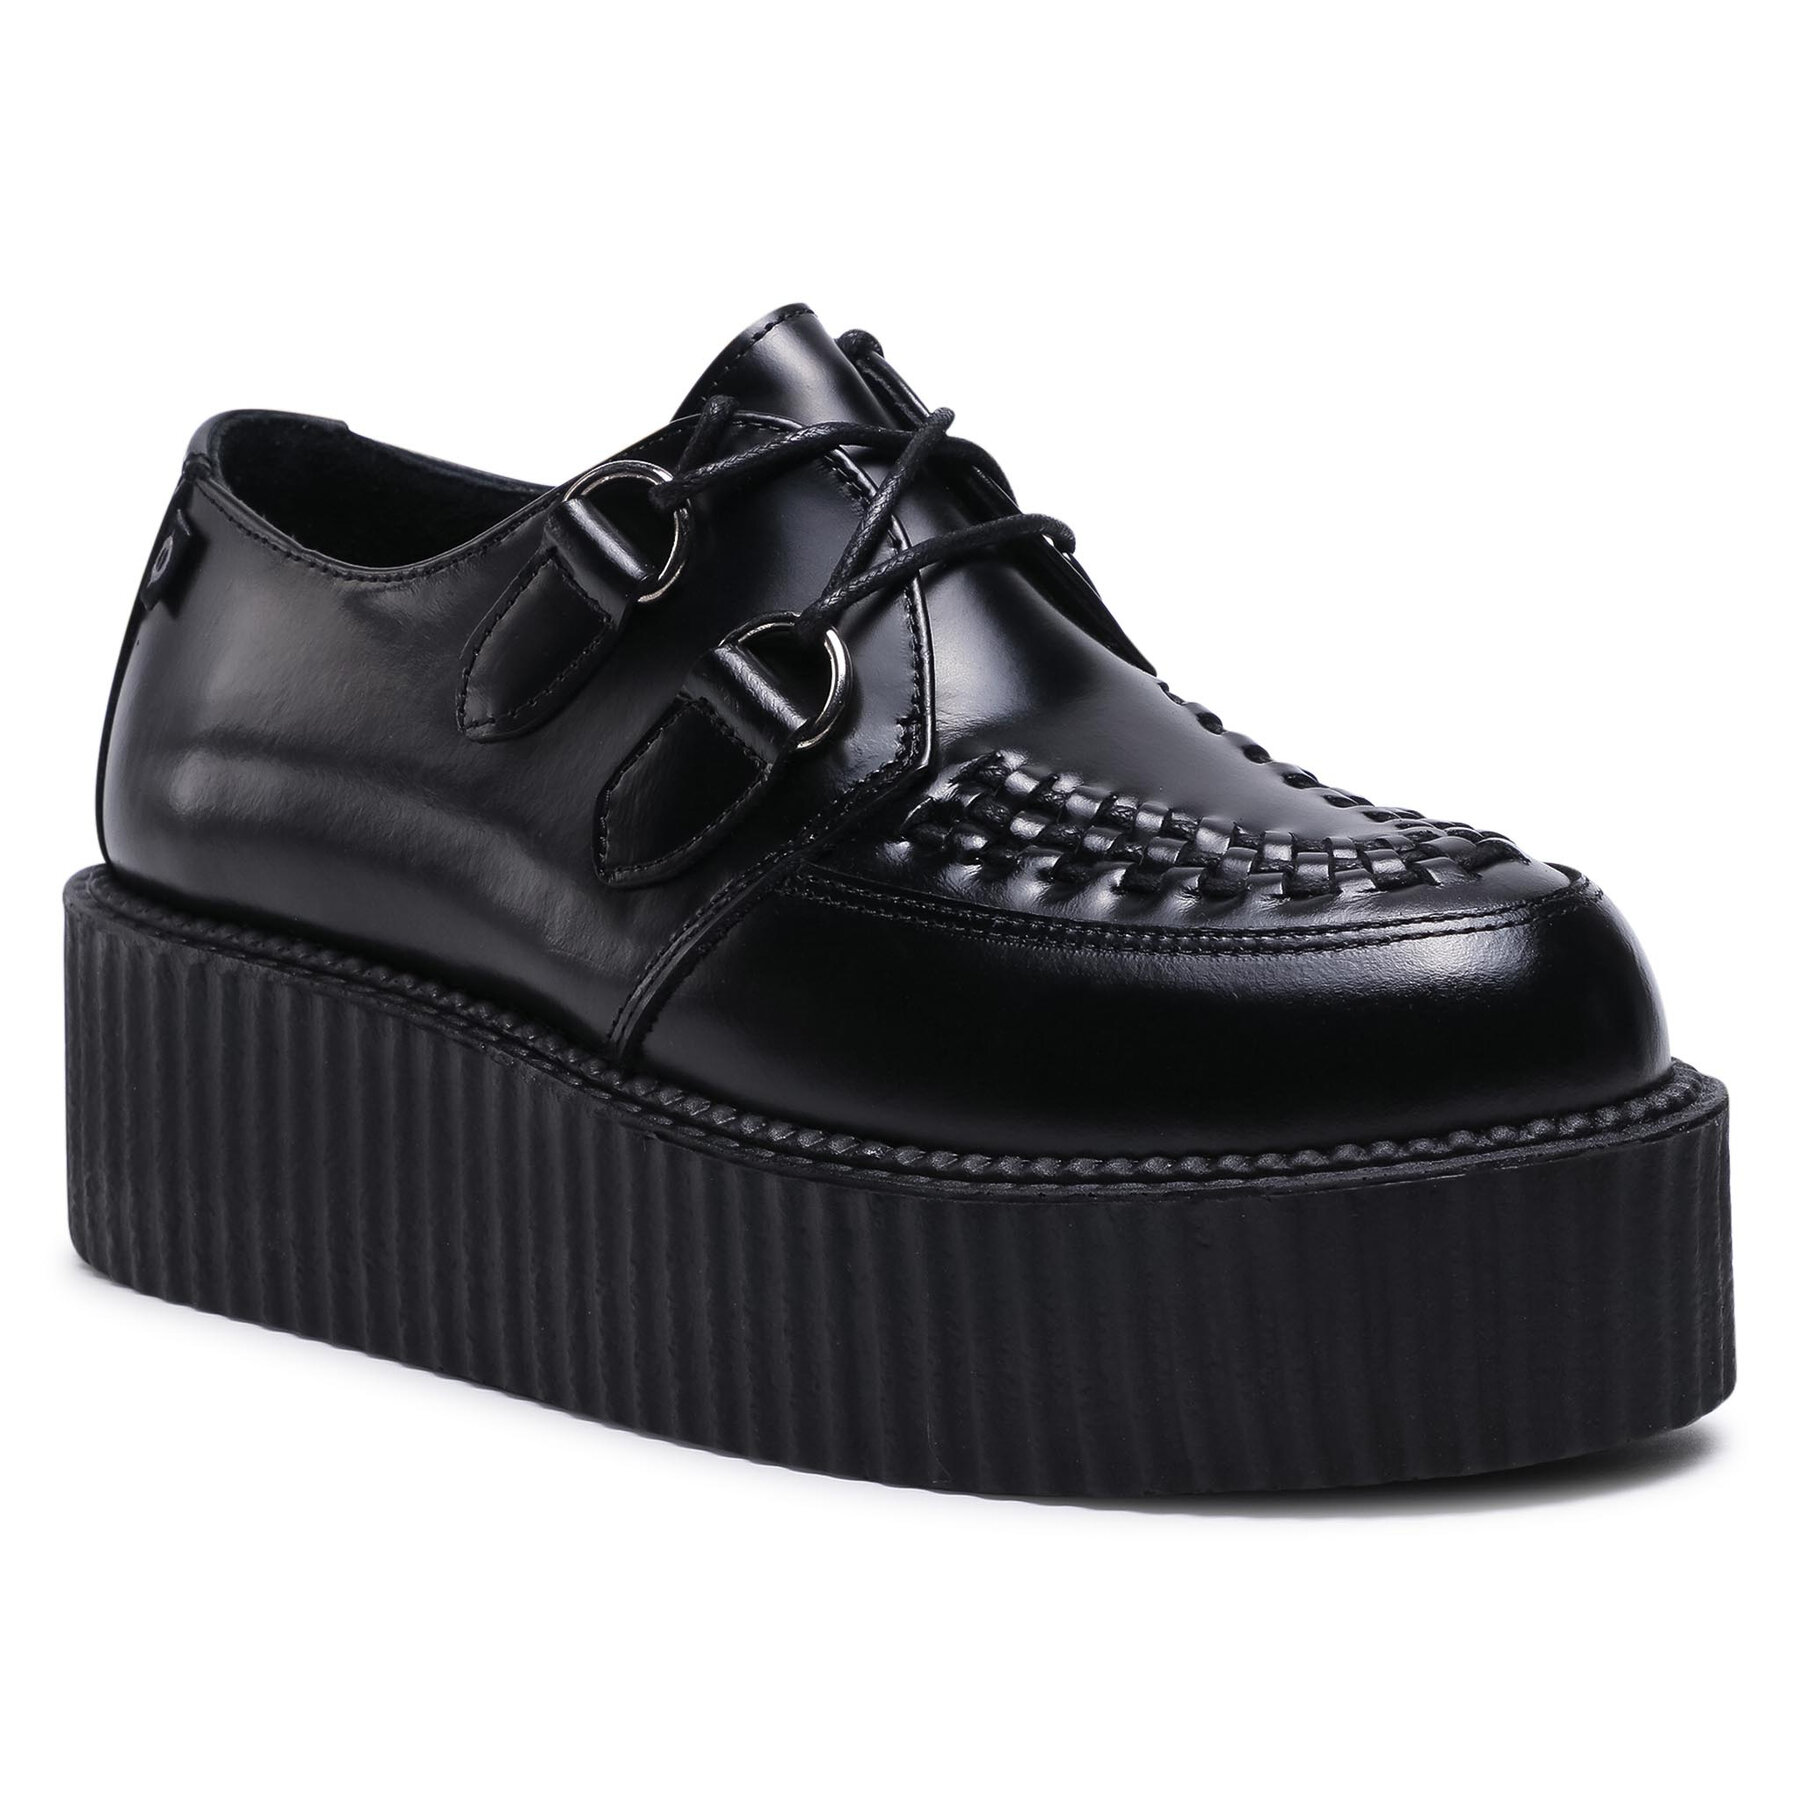 Pantofi Altercore Ered Black